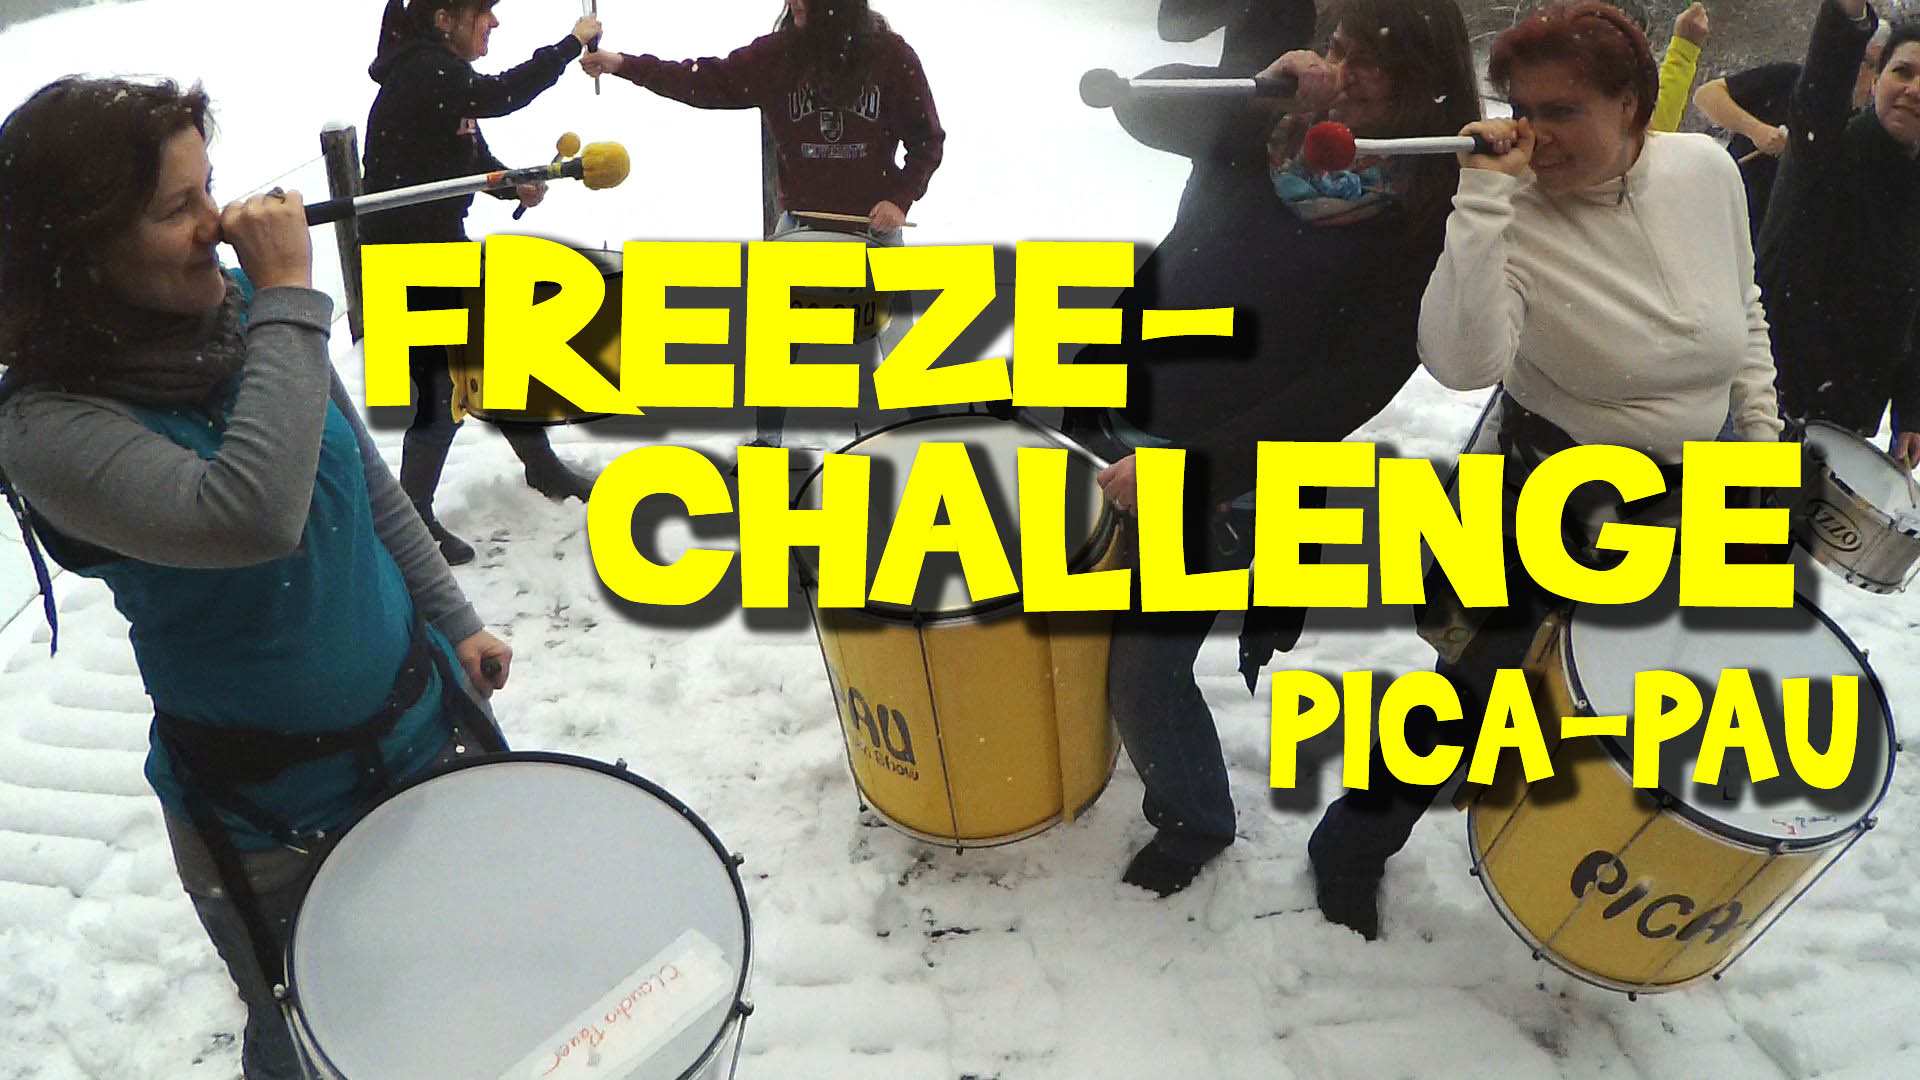 Freeze-Challenge Pica-Pau Mannequin-Challenge